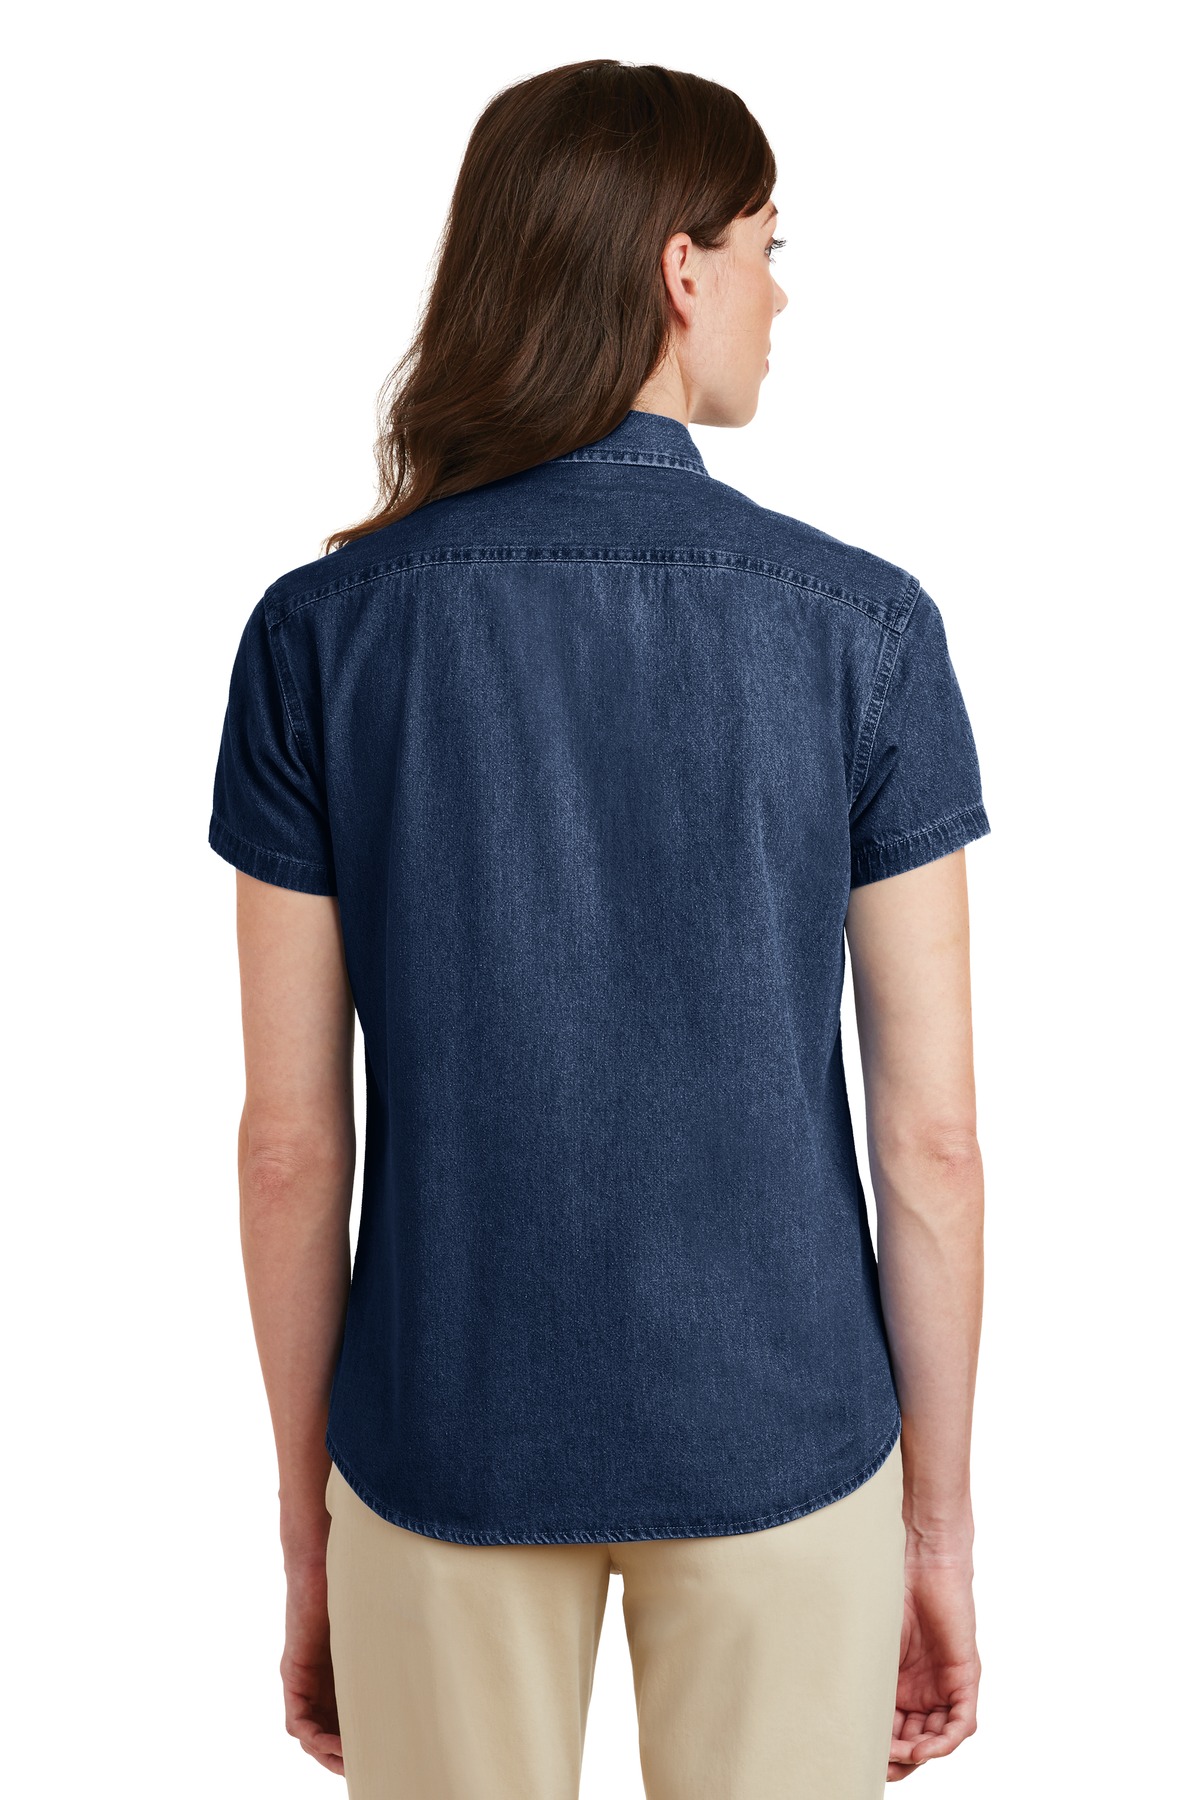 Port & Company Short Sleeve Value Denim Shirt (LSP11) Ink Blue, 4XL - image 2 of 2